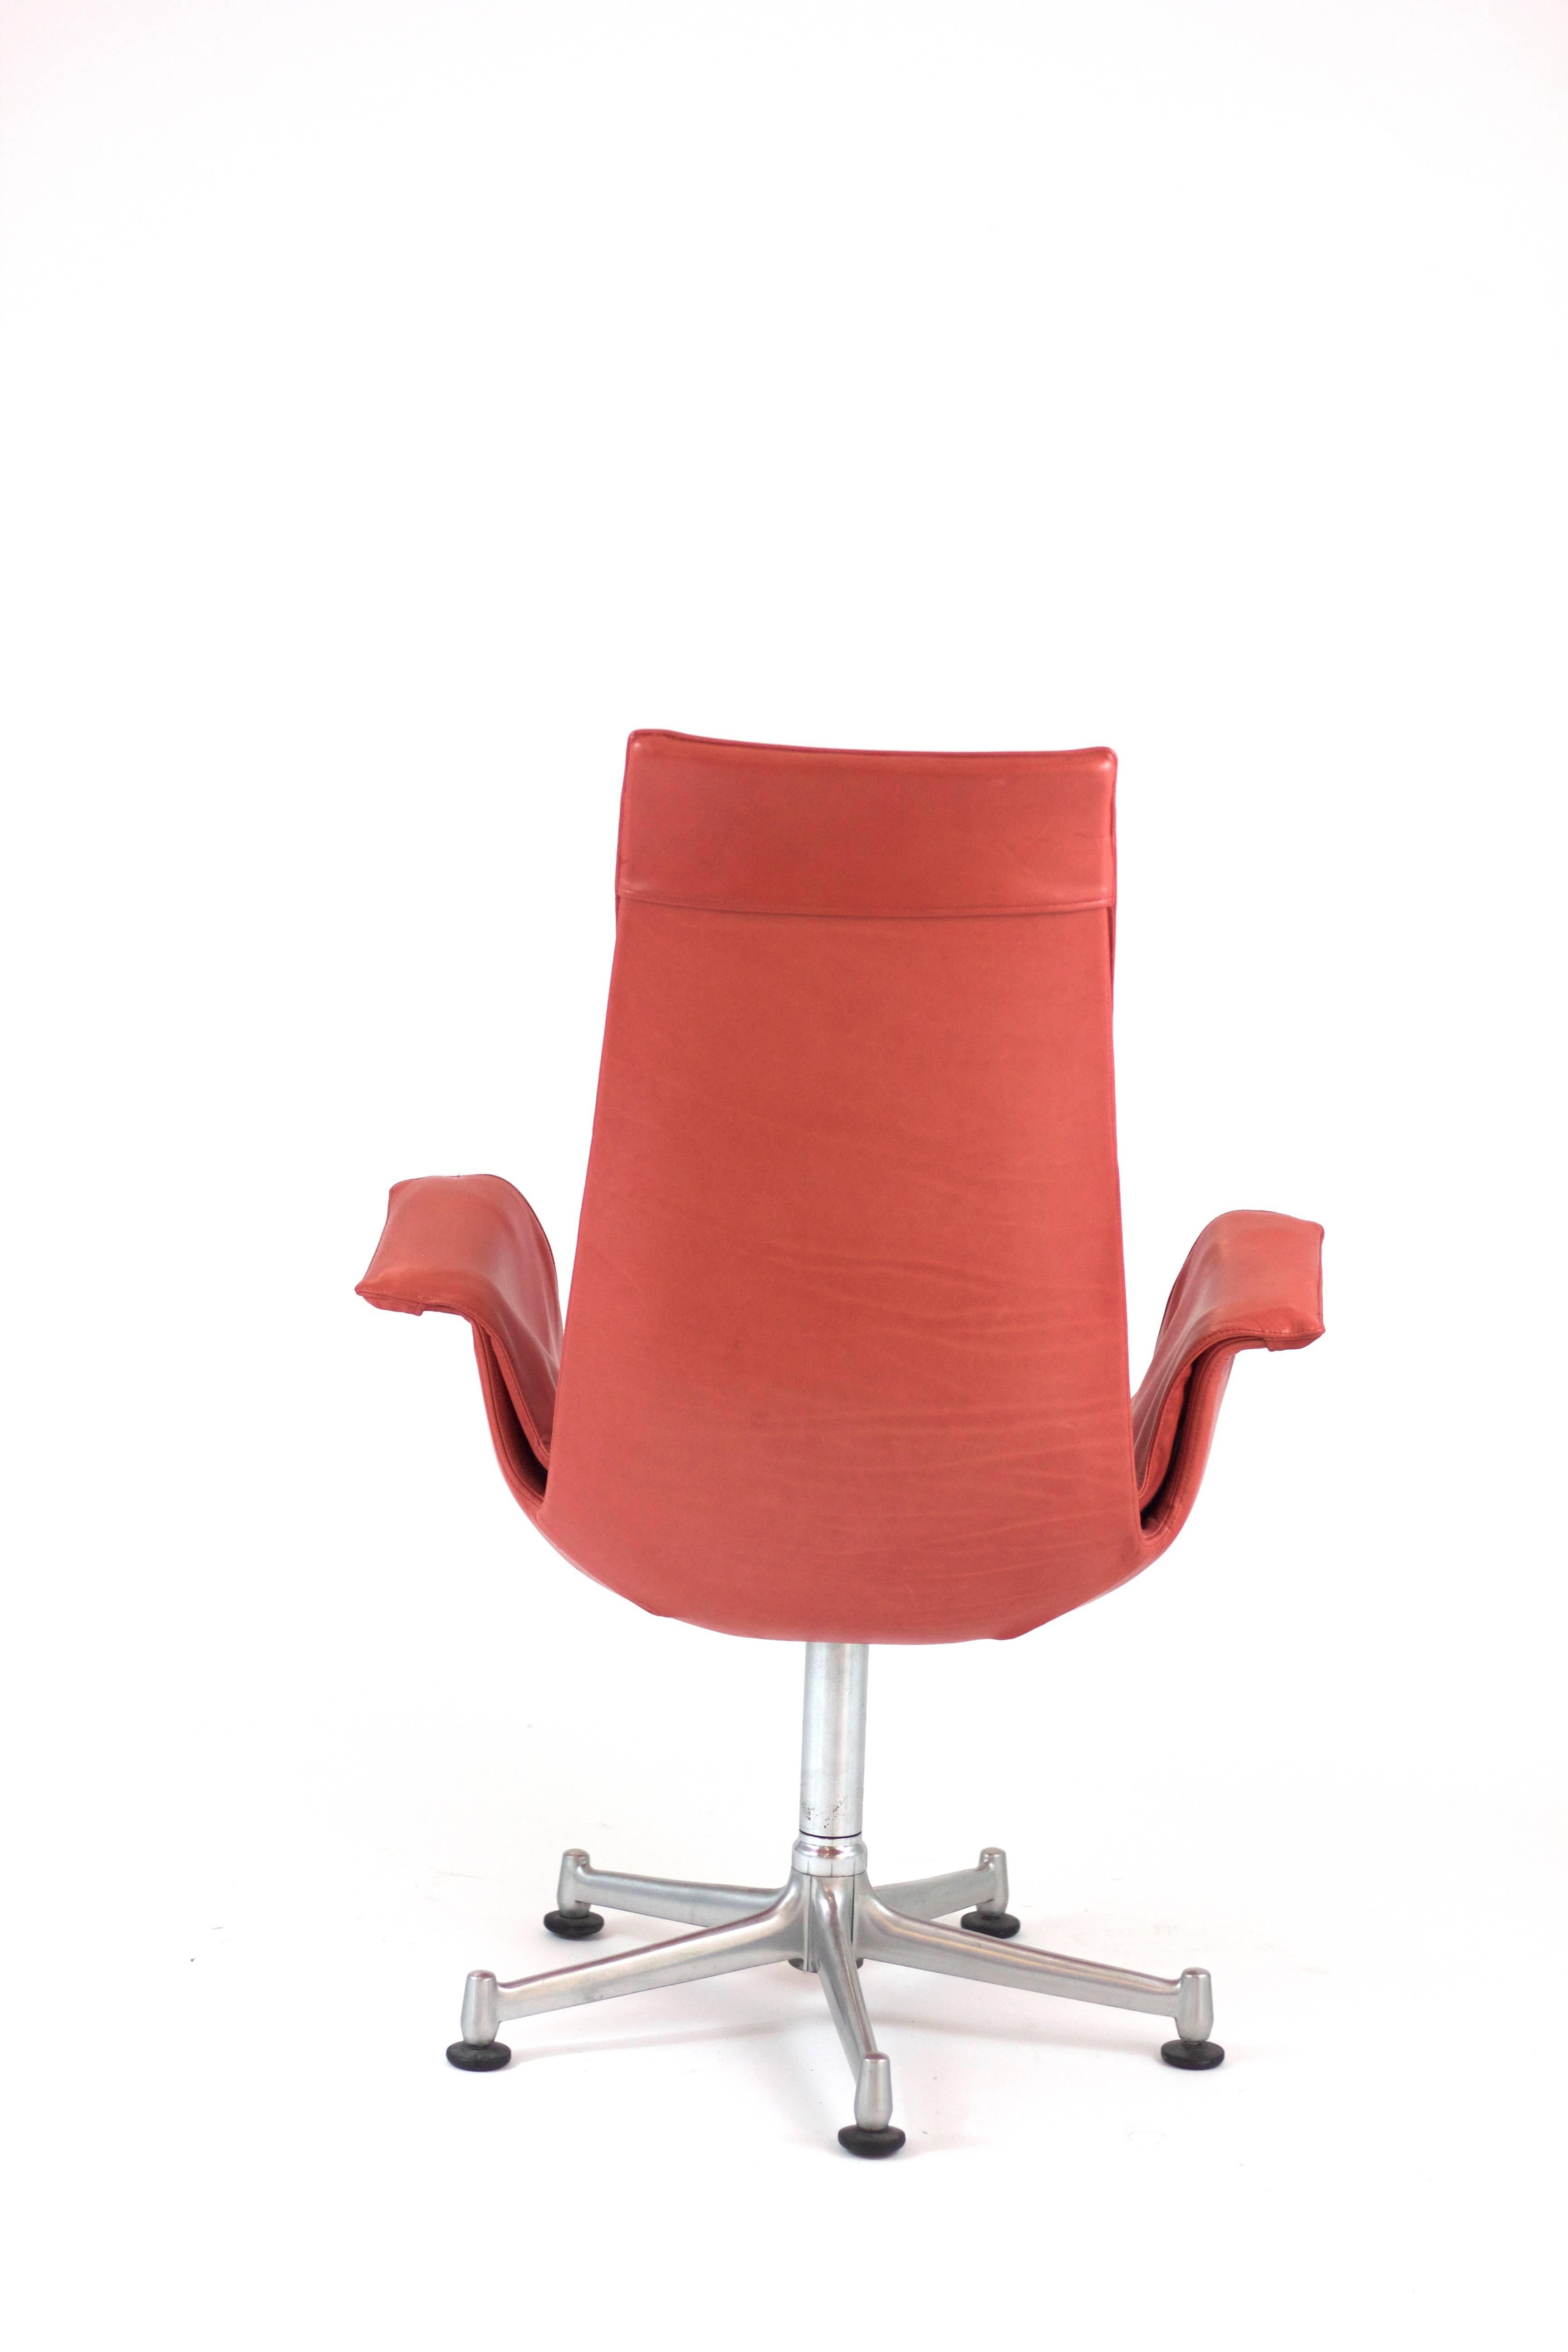 Leather Striking Bird Chair by Preben Fabricius and Jorgen Kastholm